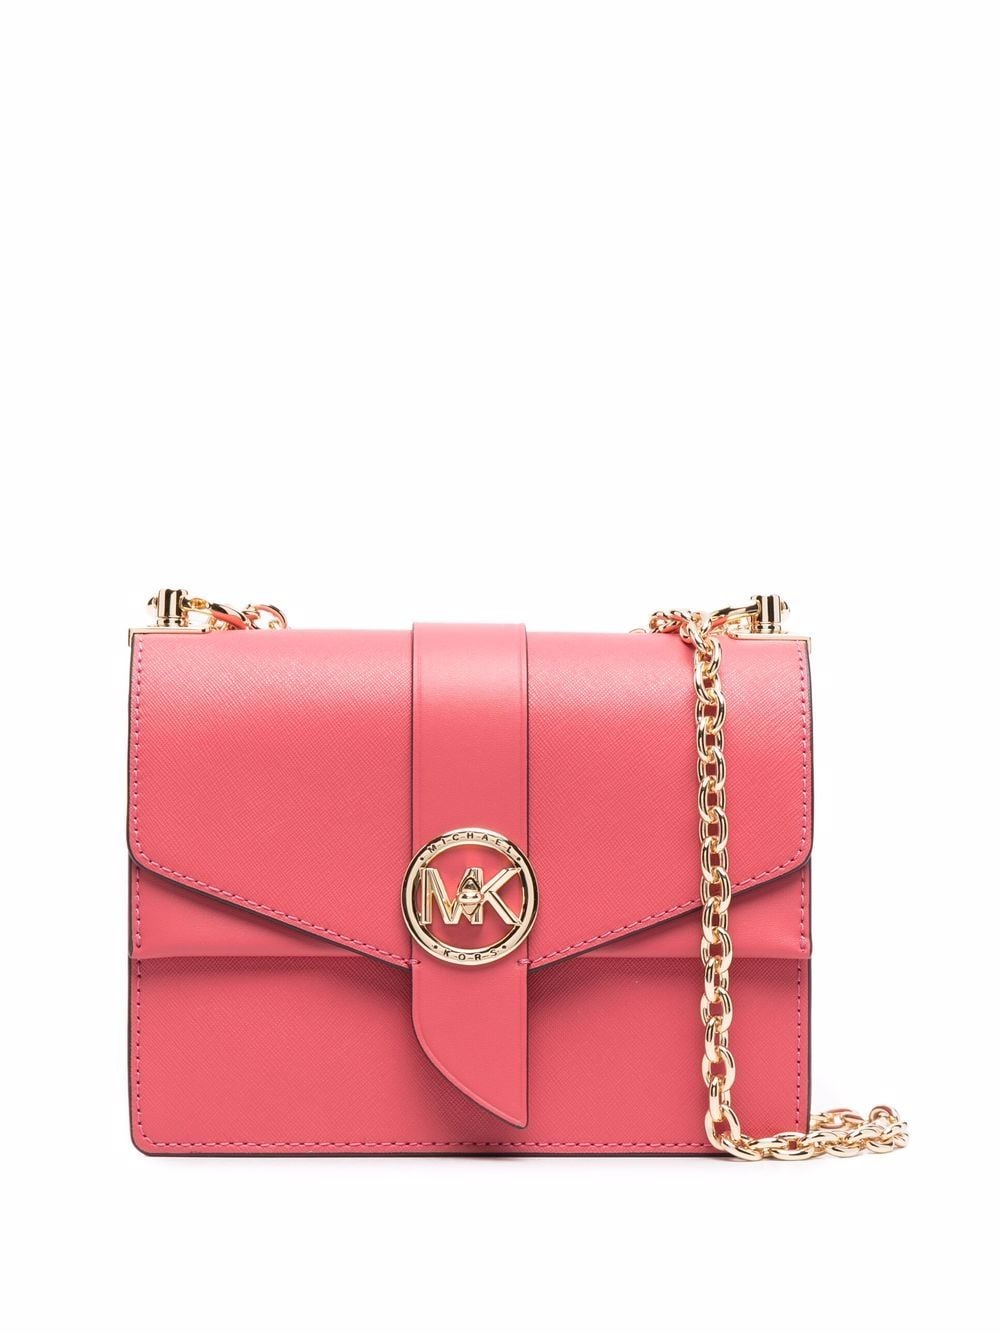 MICHAEL Michael Kors Greenwich Leather Crossbody Bag in Pink